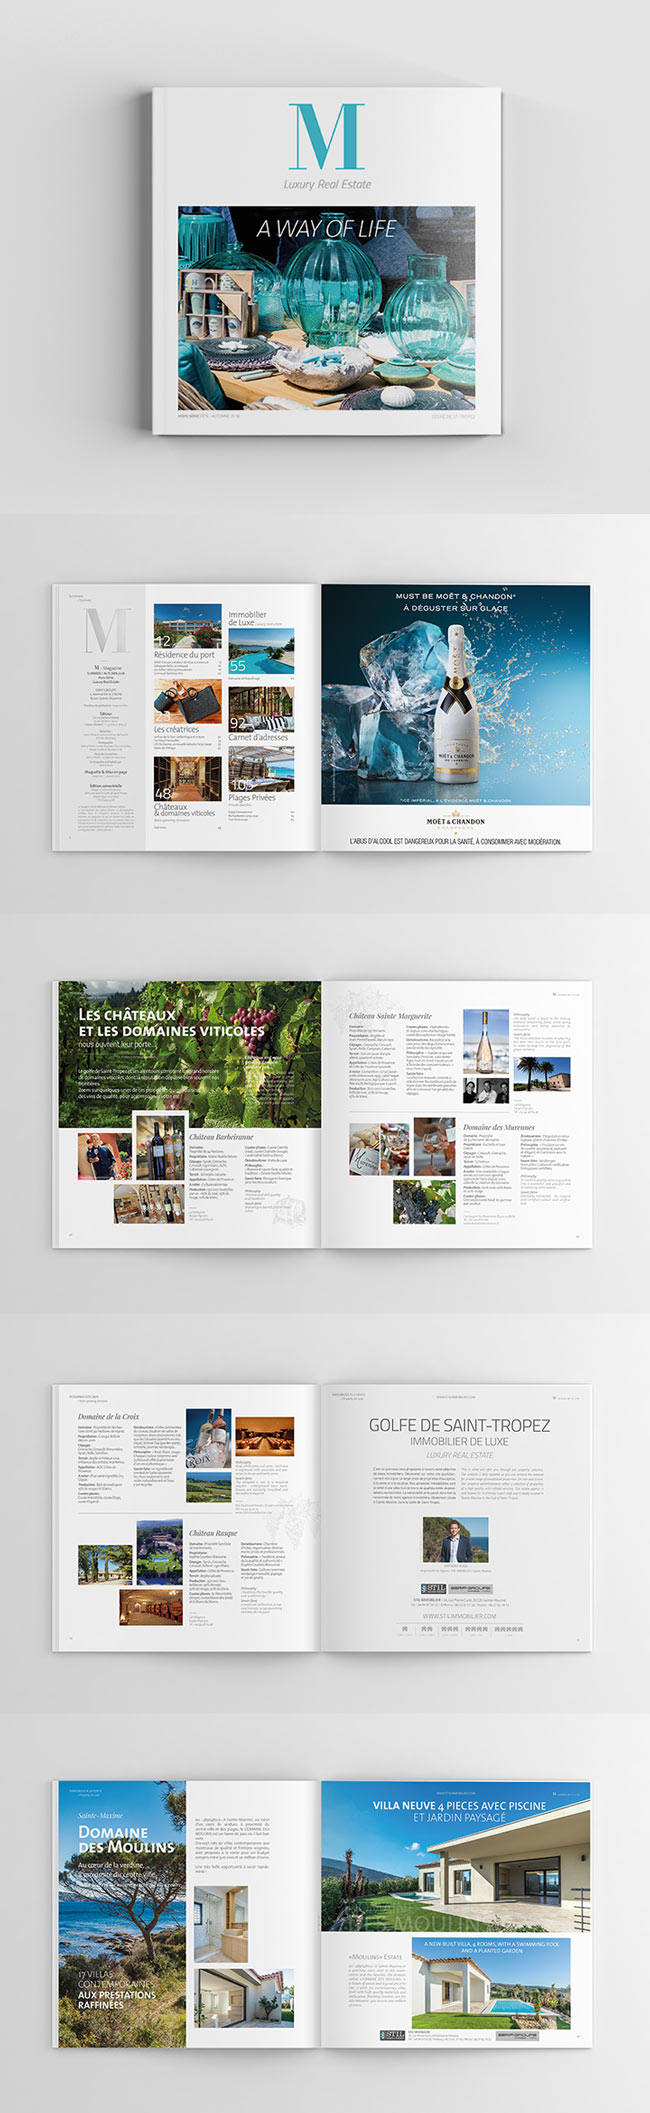 Graphiste freelance - Création magazine print 116 pages